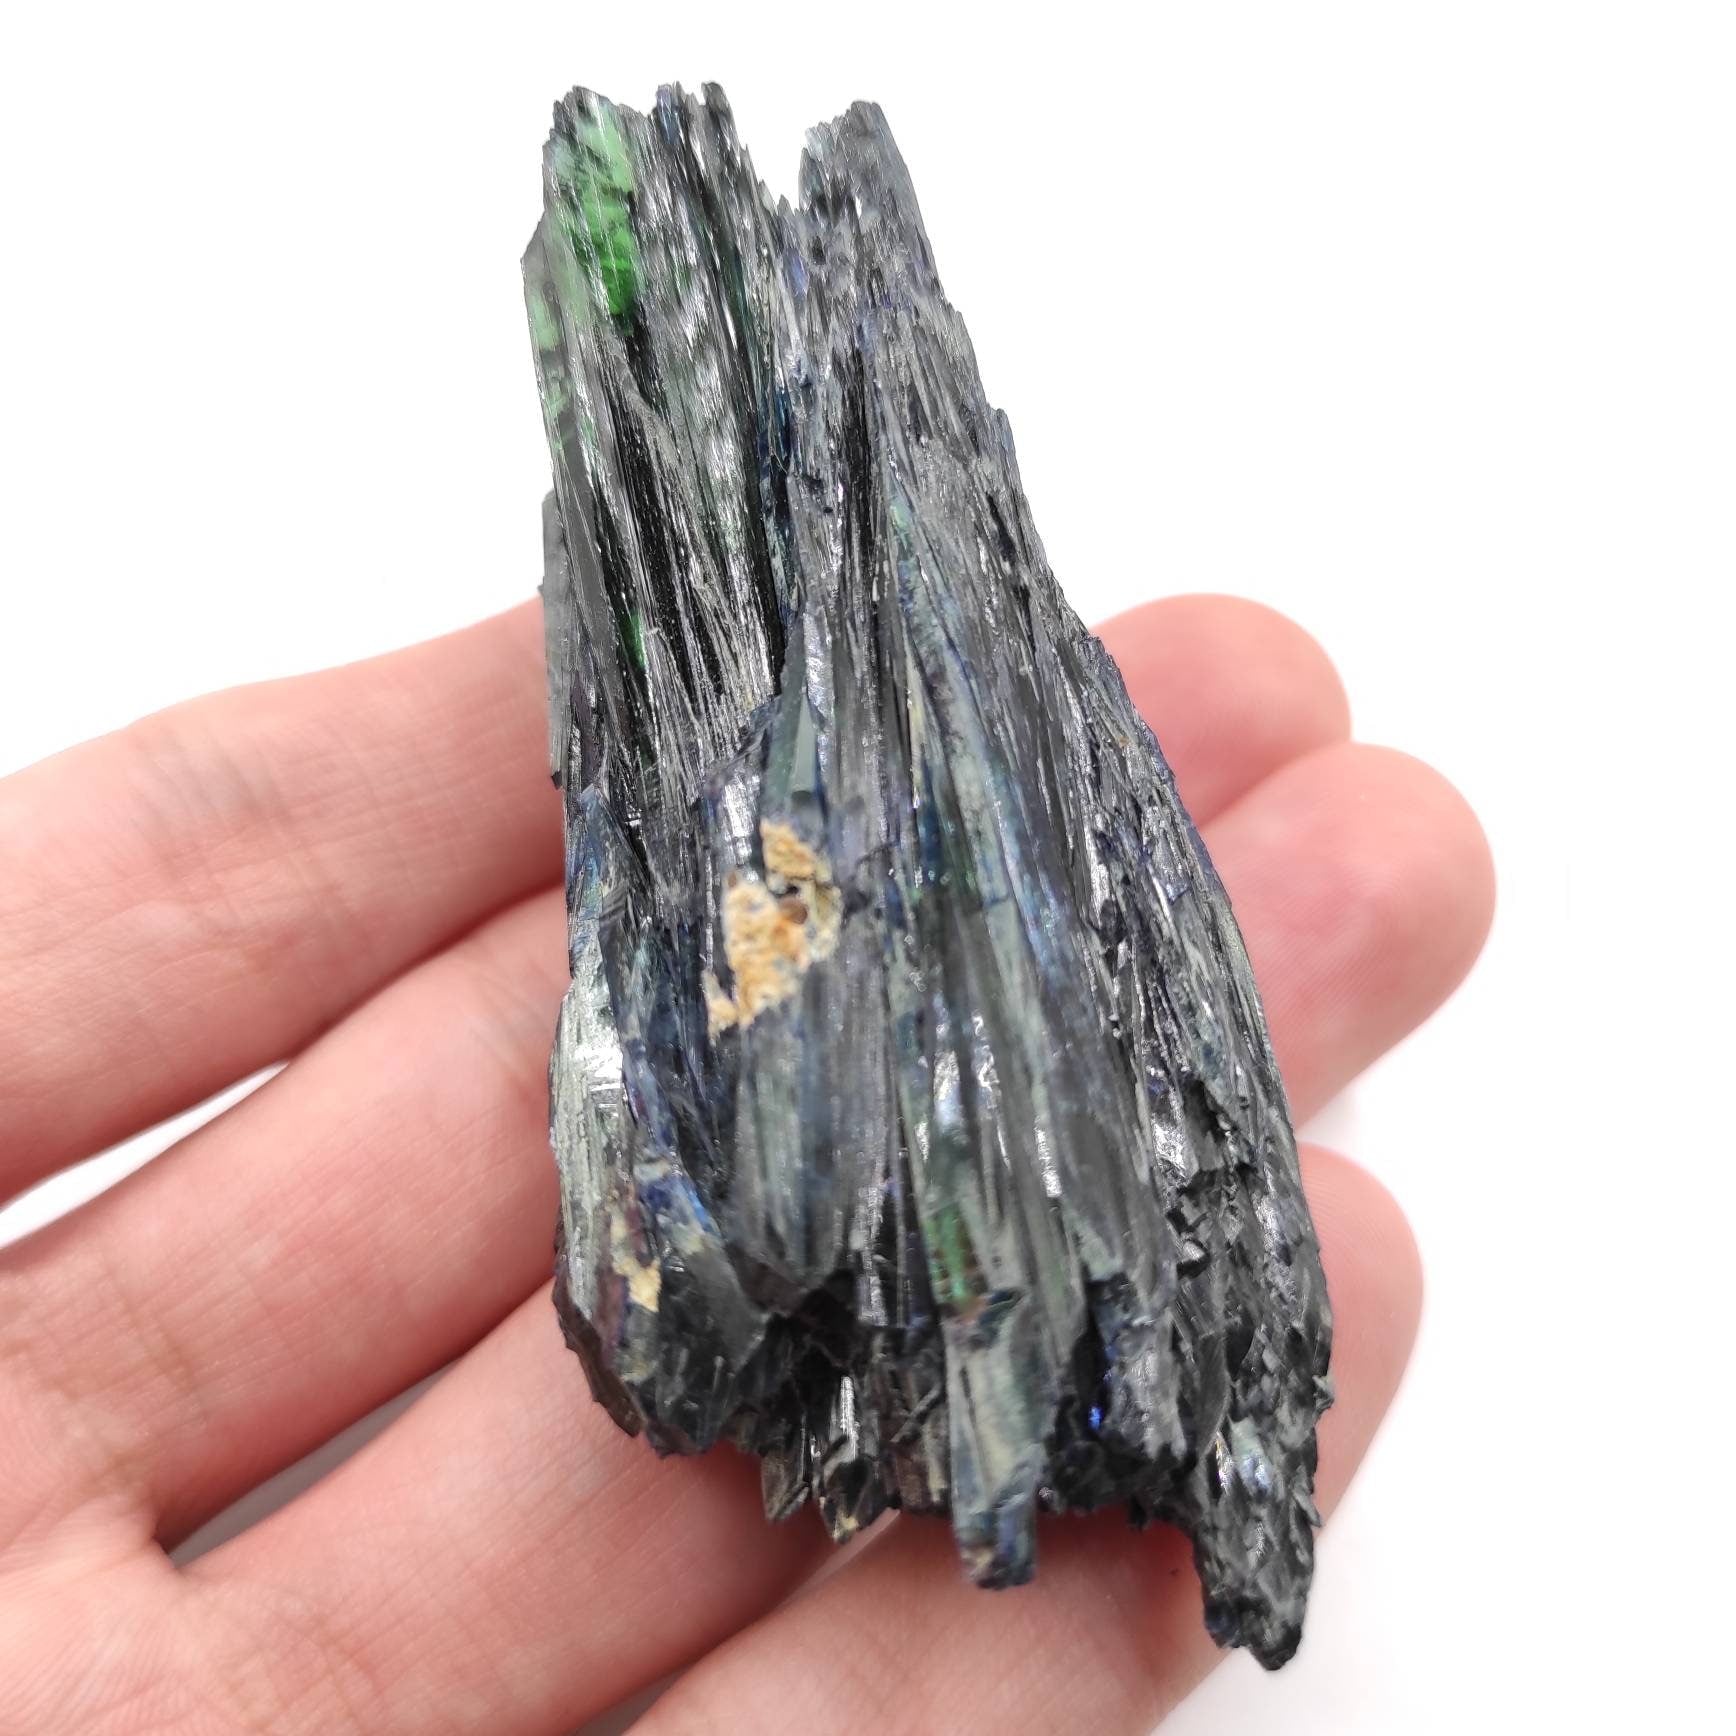 56g Vivianite Mineral Specimen - High Quality Vivianite Crystal Specimen - Green Vivianite Brazil - Blue Vivianite Cluster - Raw Crystals